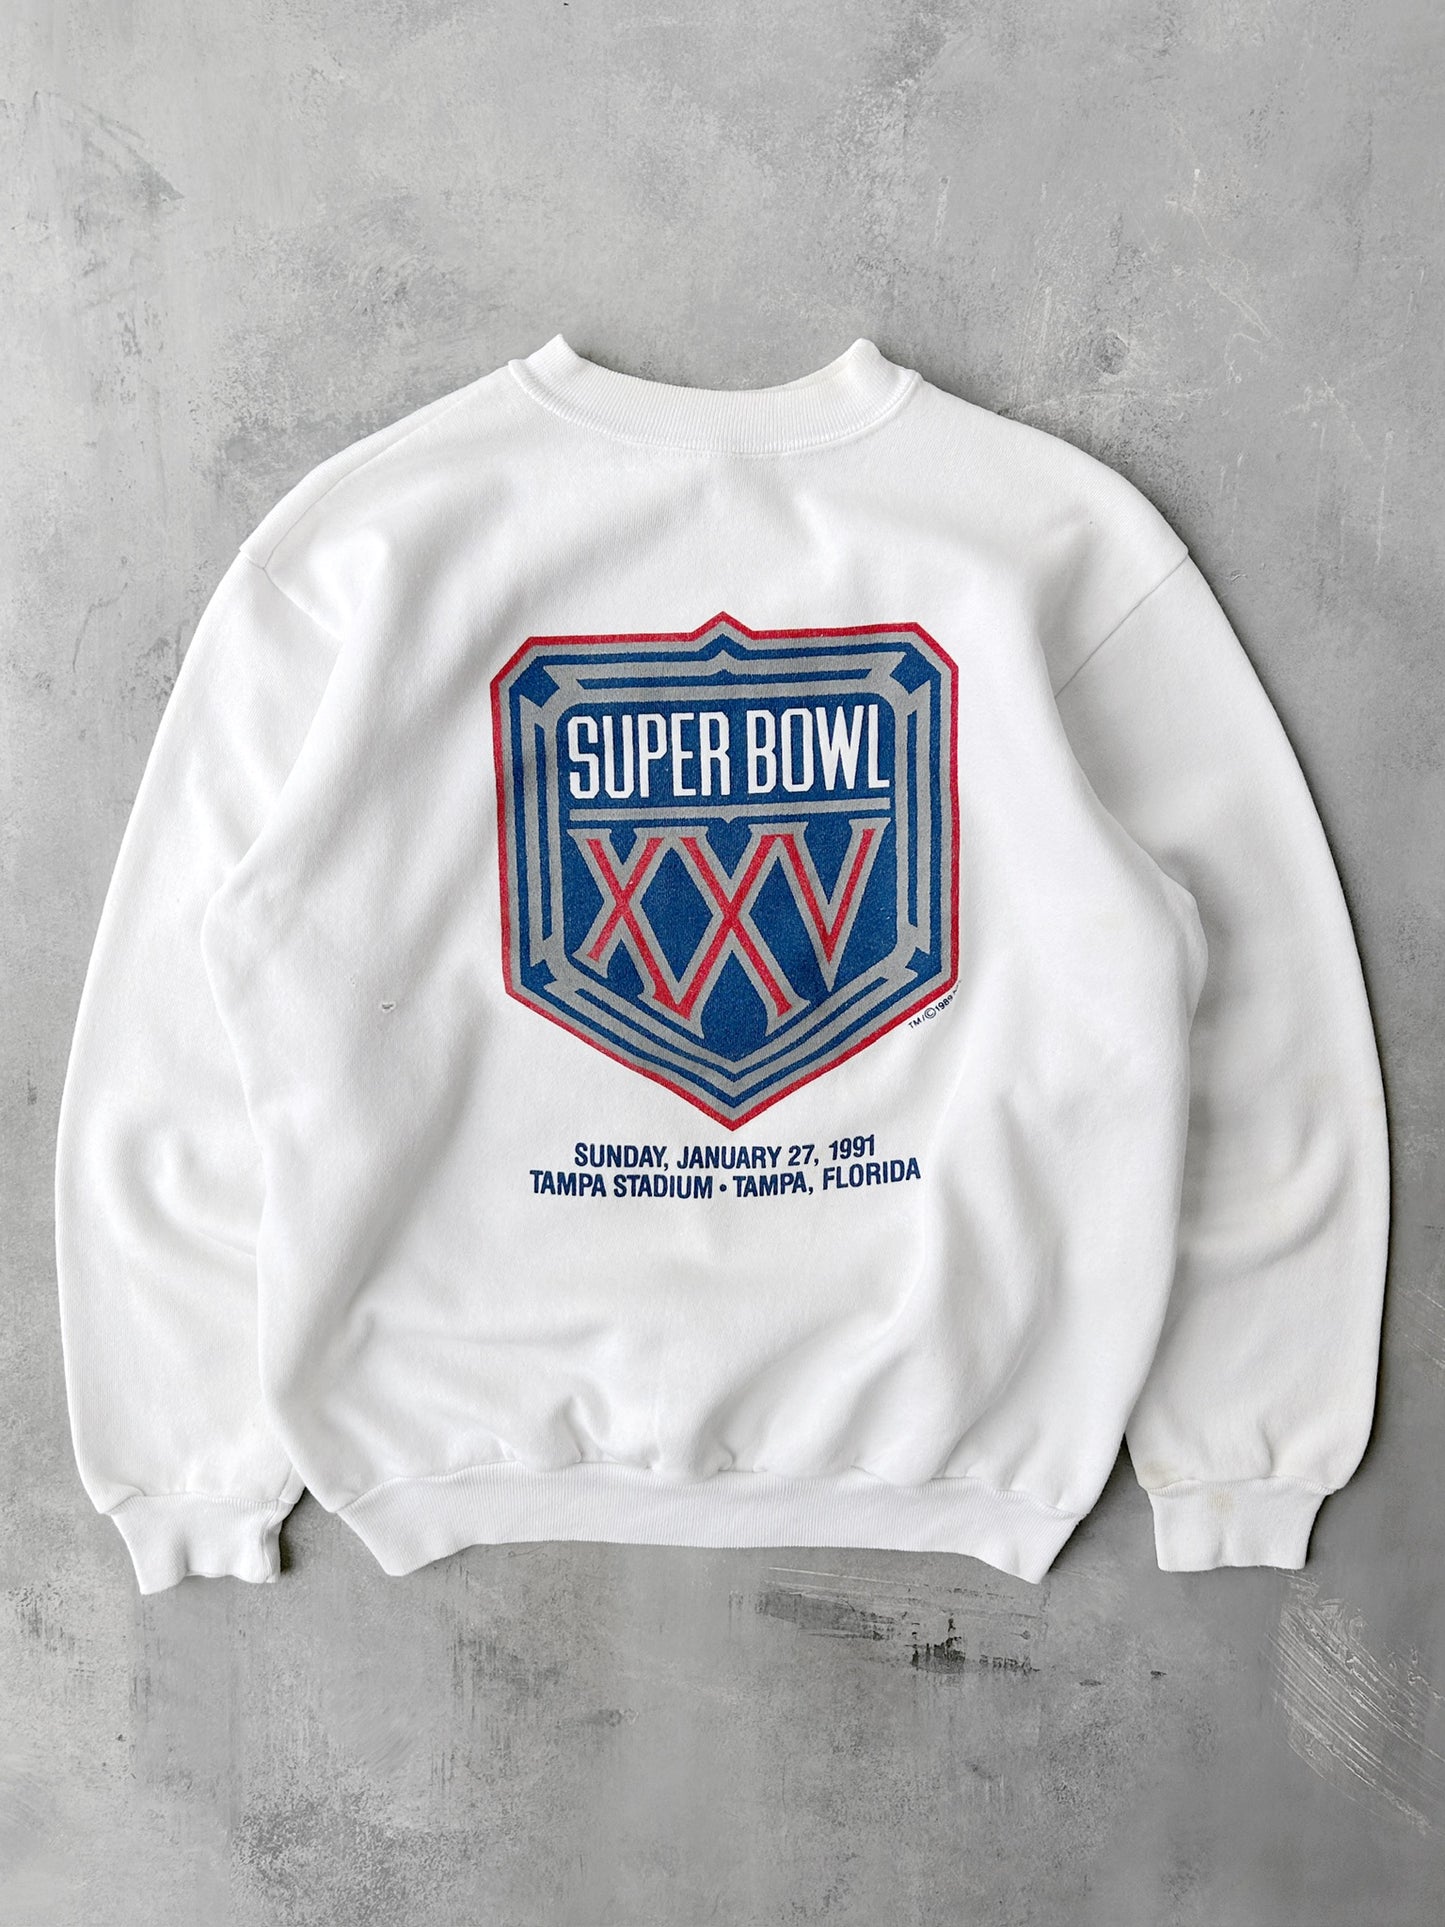 Super Bowl XXV Sweatshirt '91 - Large